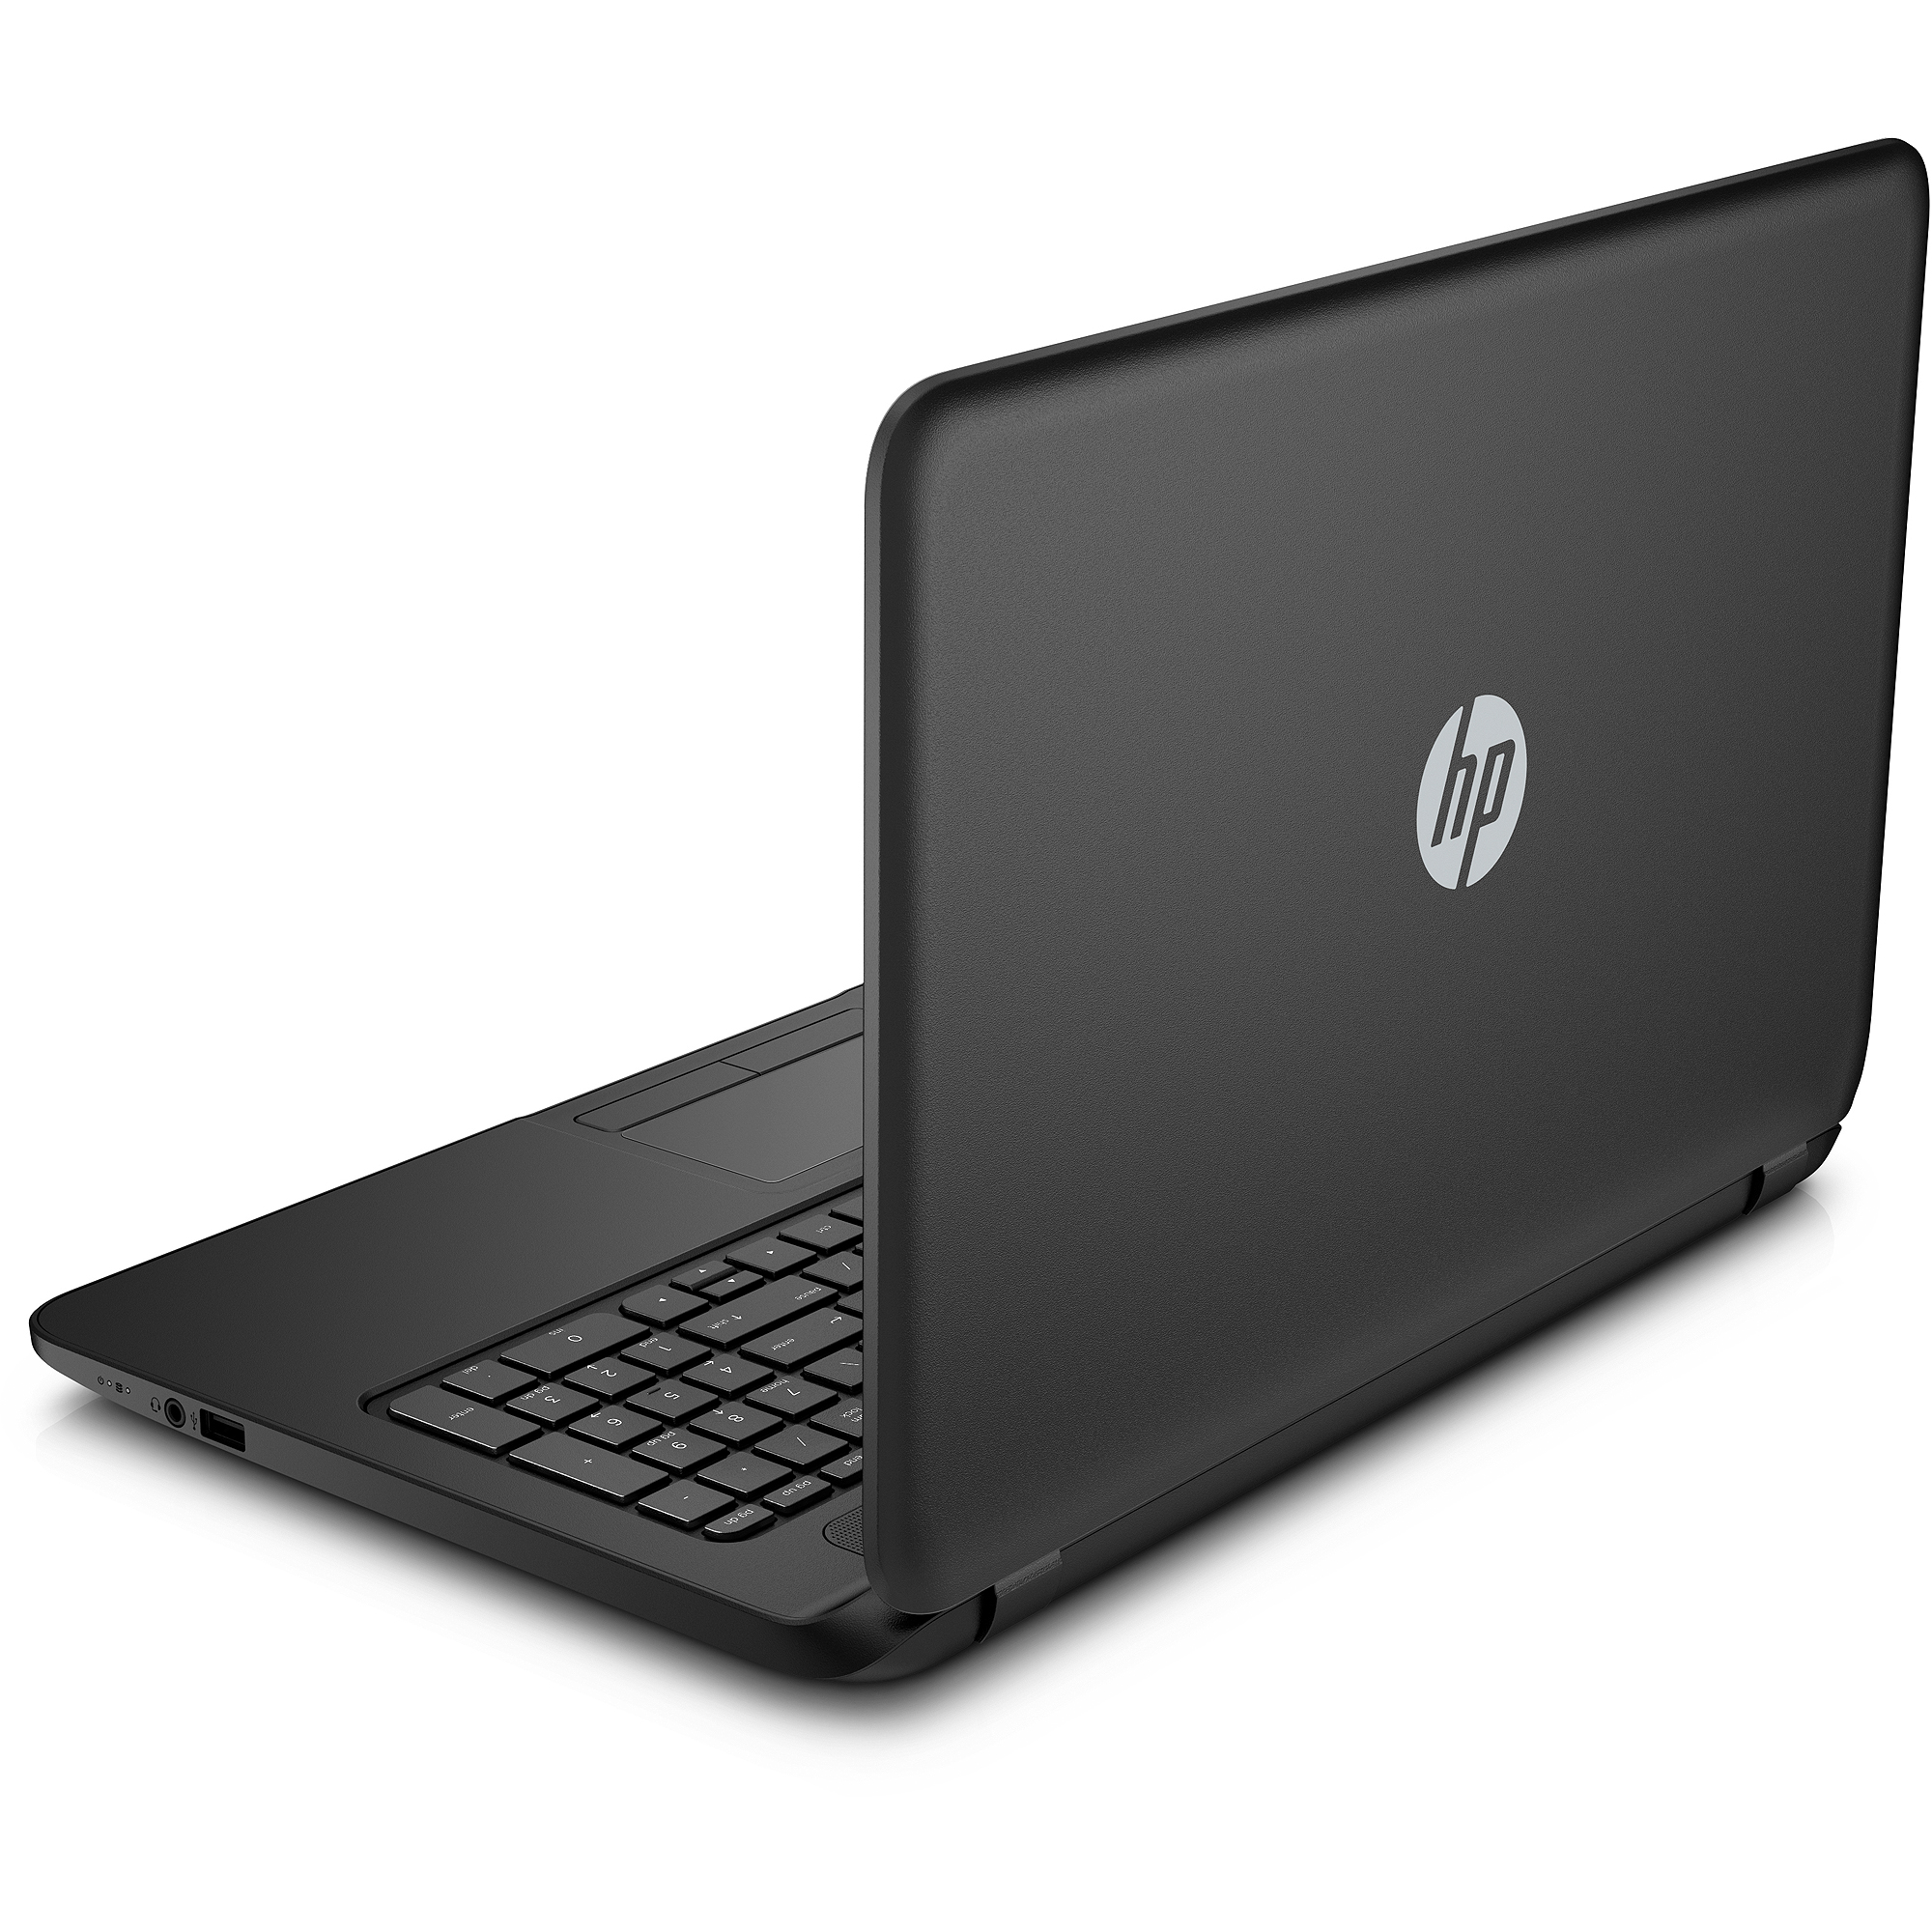 HP 15.6" Laptop, AMD E-Series E1-2100, 500GB HD, Windows 8.1, 15-f009wm - image 3 of 3